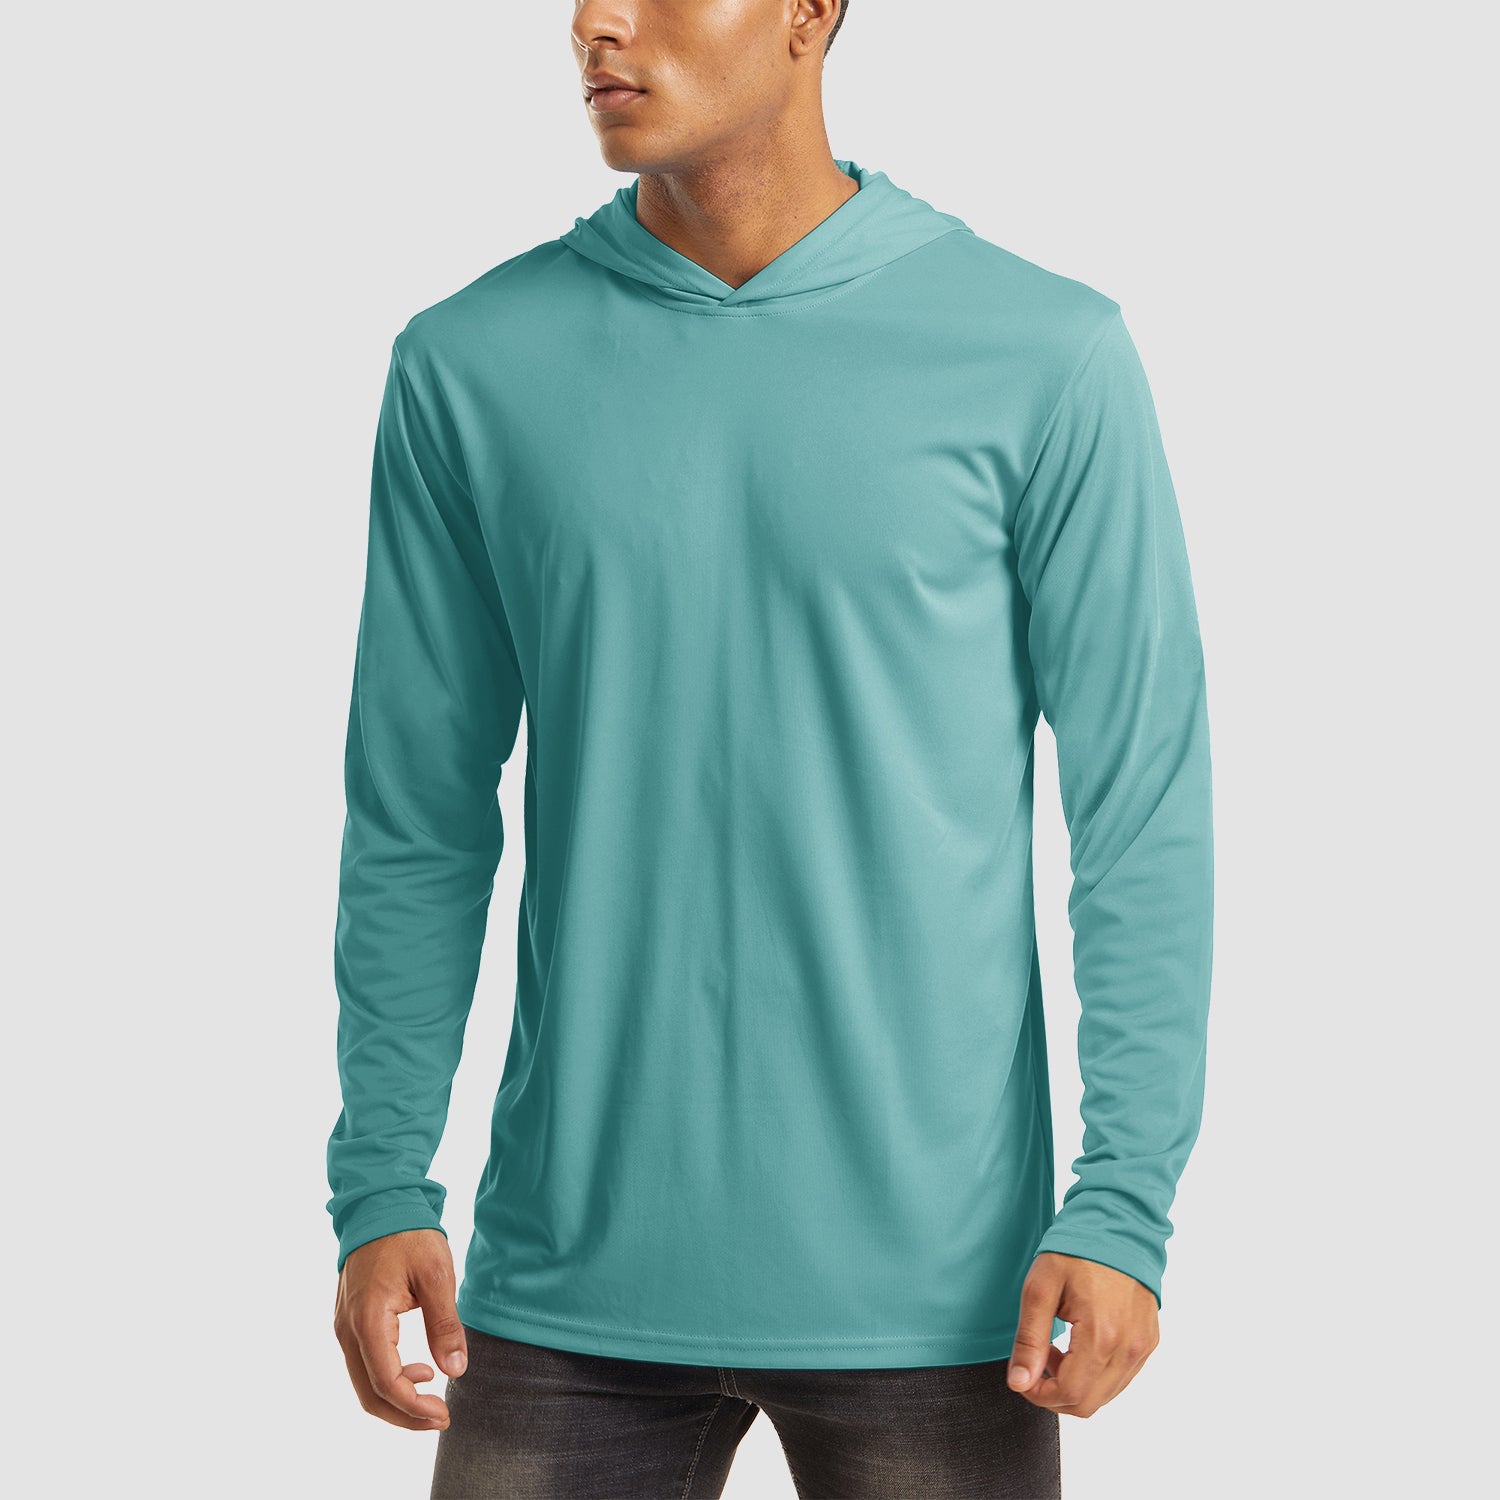 【Buy 4 Get 4th Free】Men's Long Sleeve Hooded Shirt UPF 50+ Athletic Shirts, Grey / M